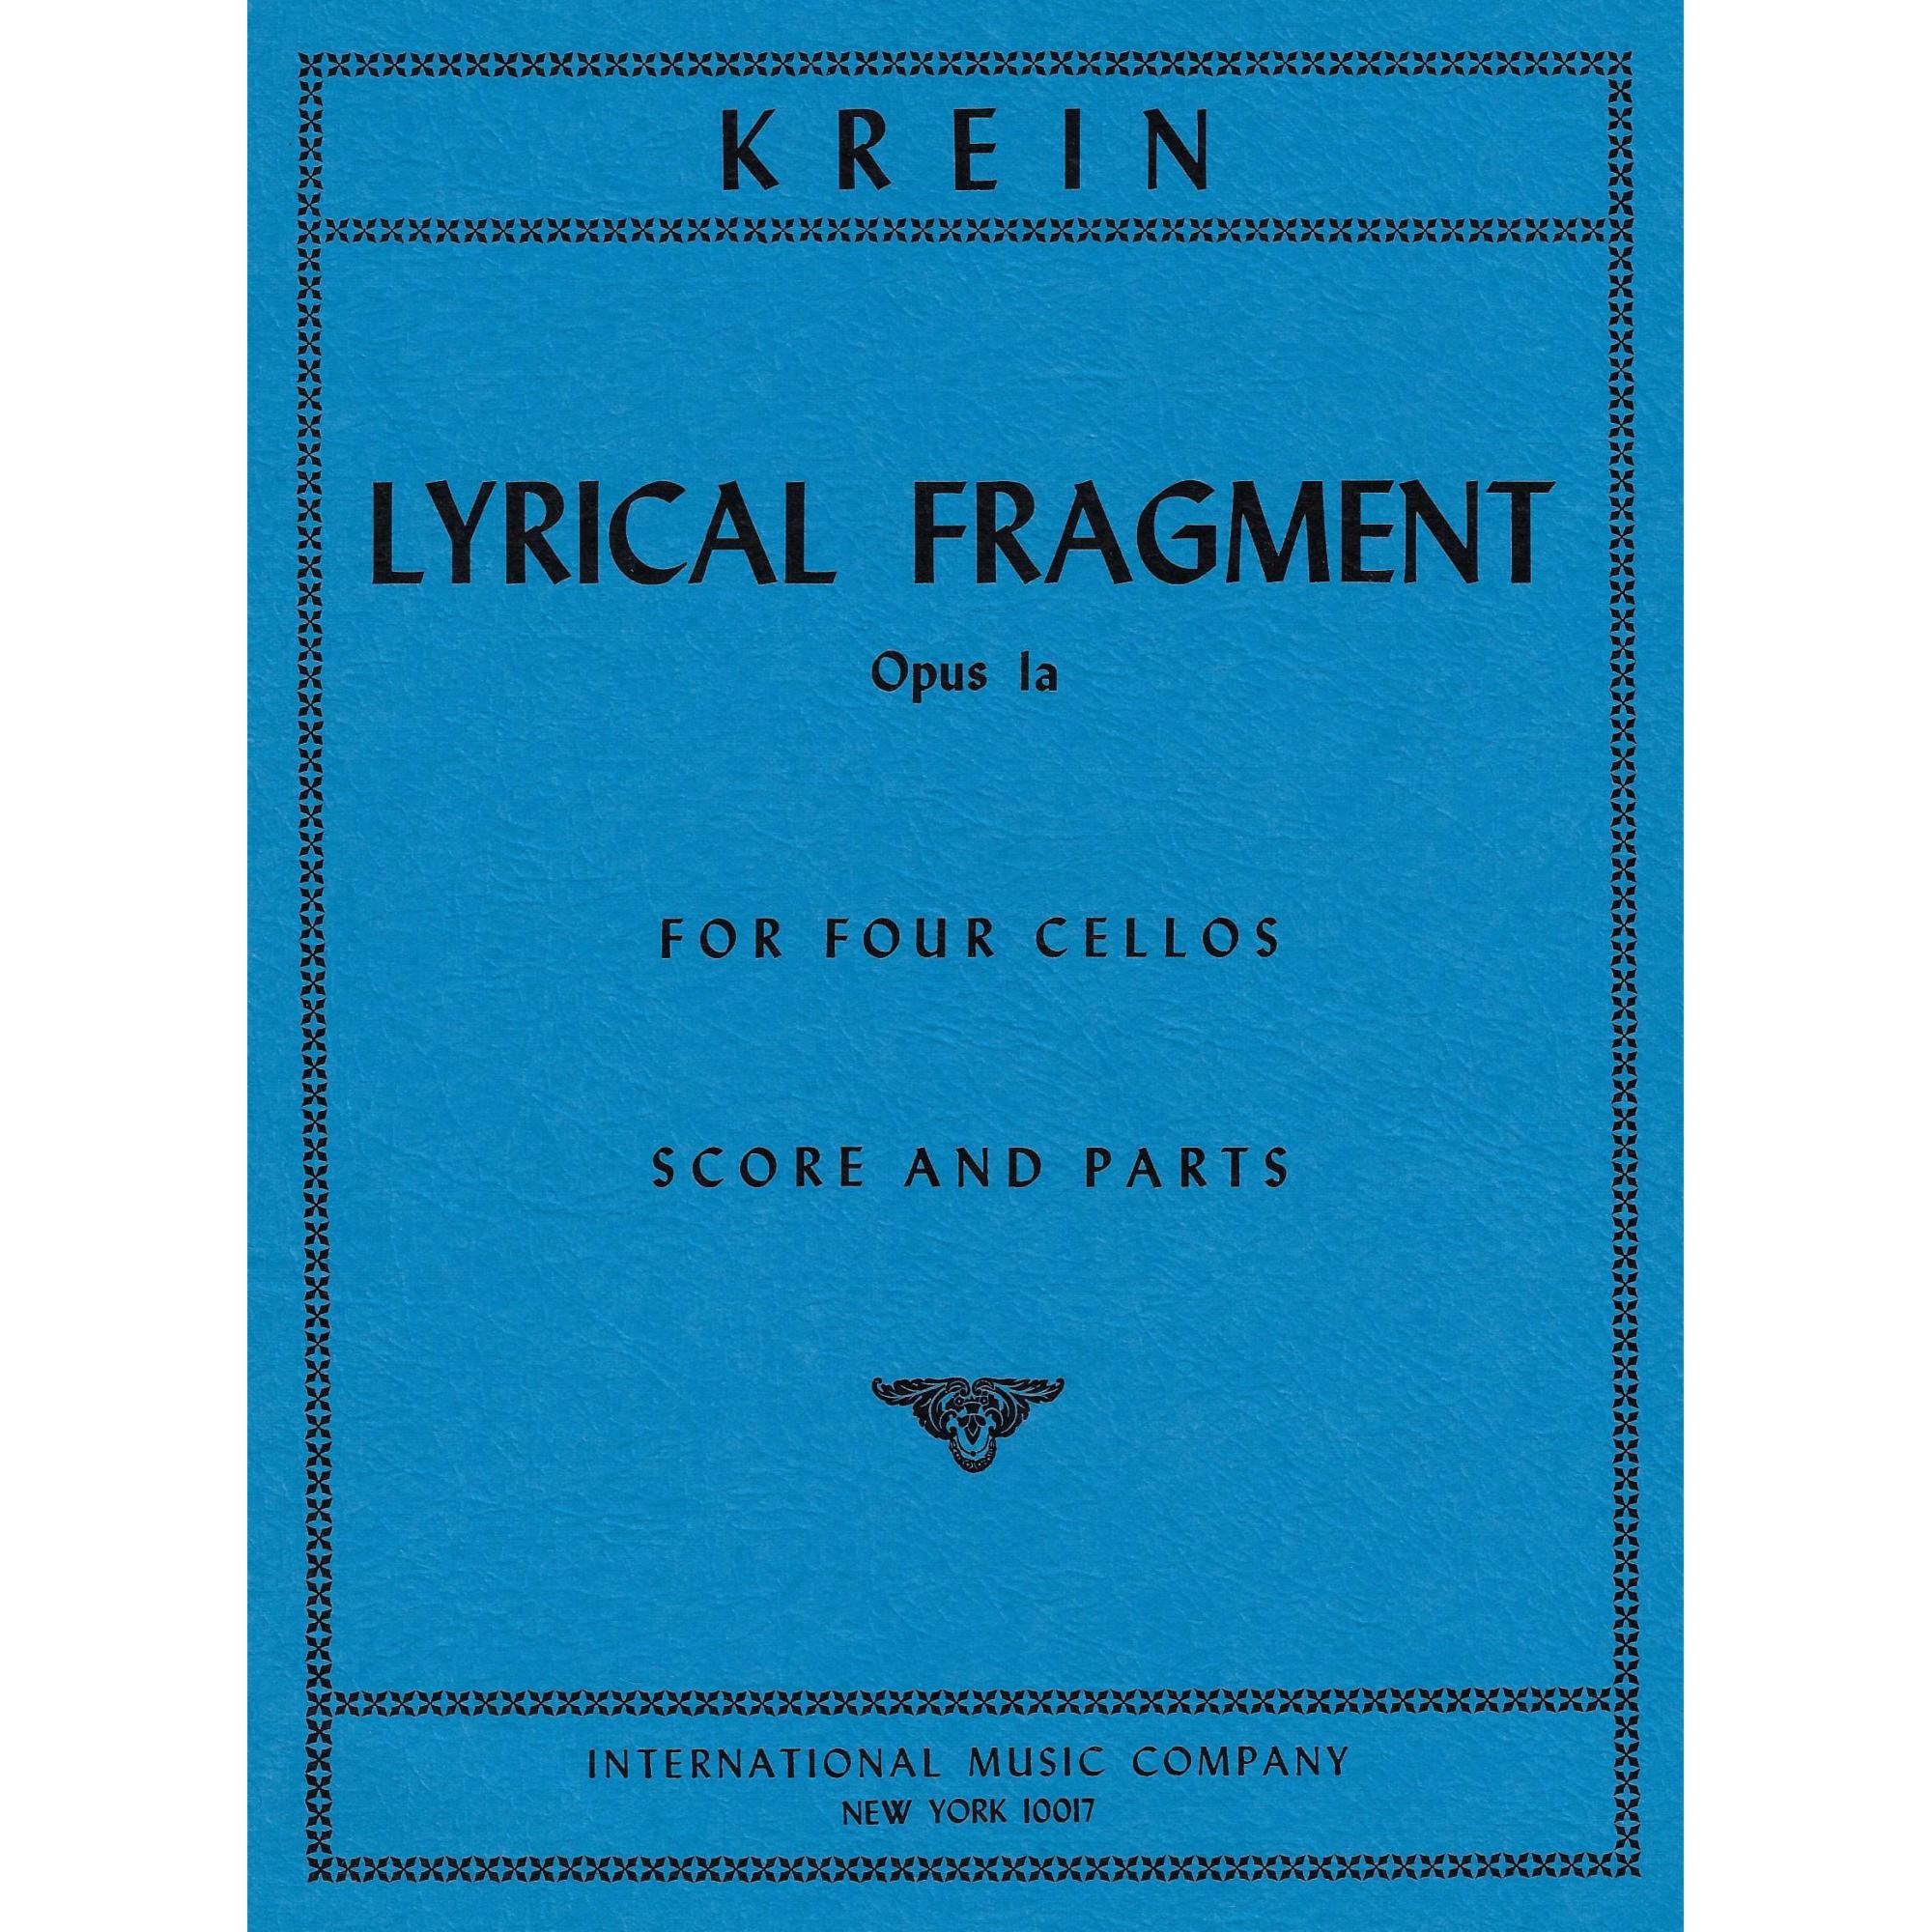 Krein -- Lyrical Fragment, Op. 1a for Four Cellos